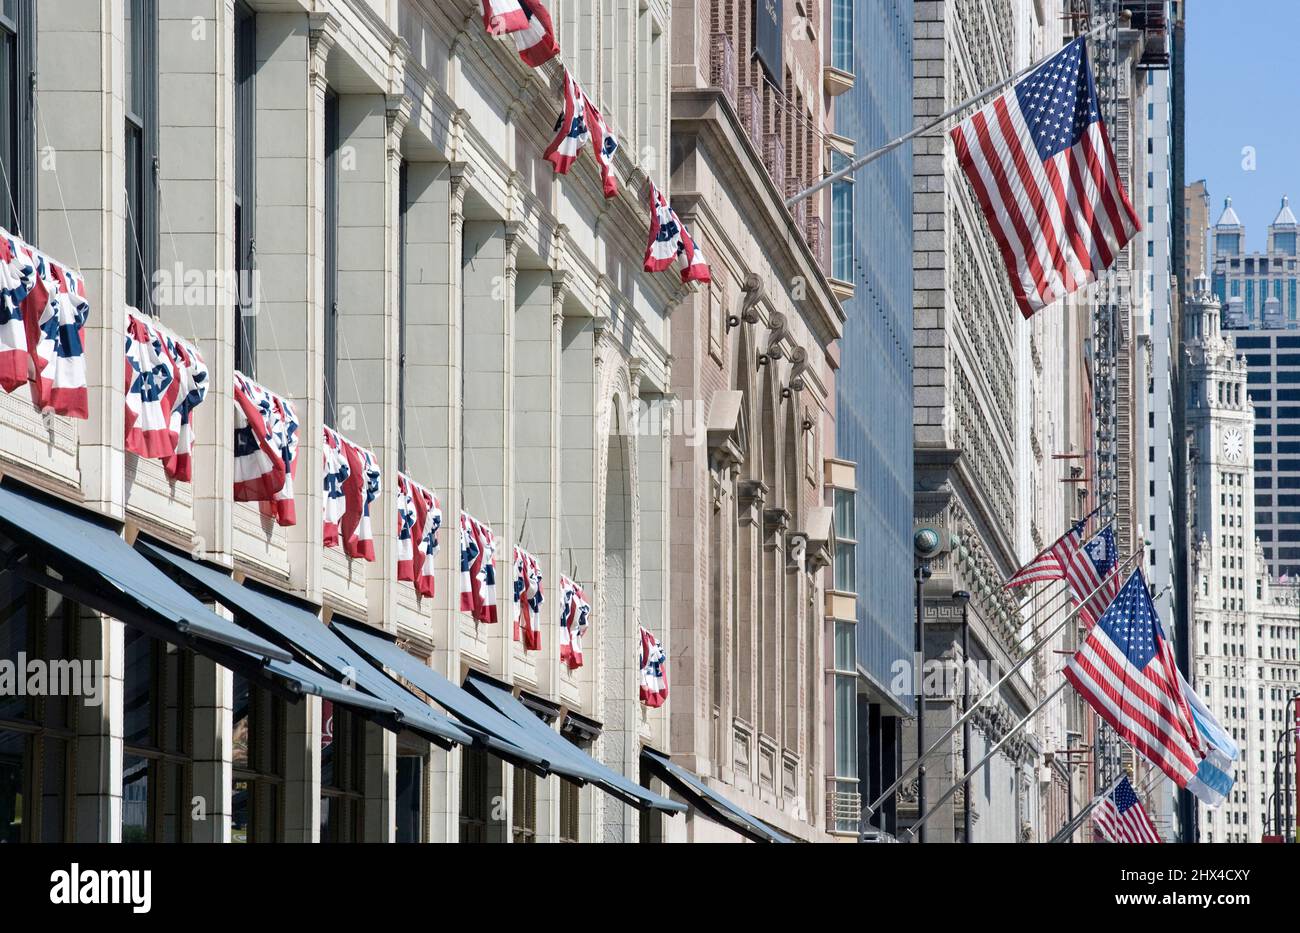 UNITED STATES FLAGS FLYING MICHIGAN AVENUE CHICAGO ILLINOIS USA Stock Photo